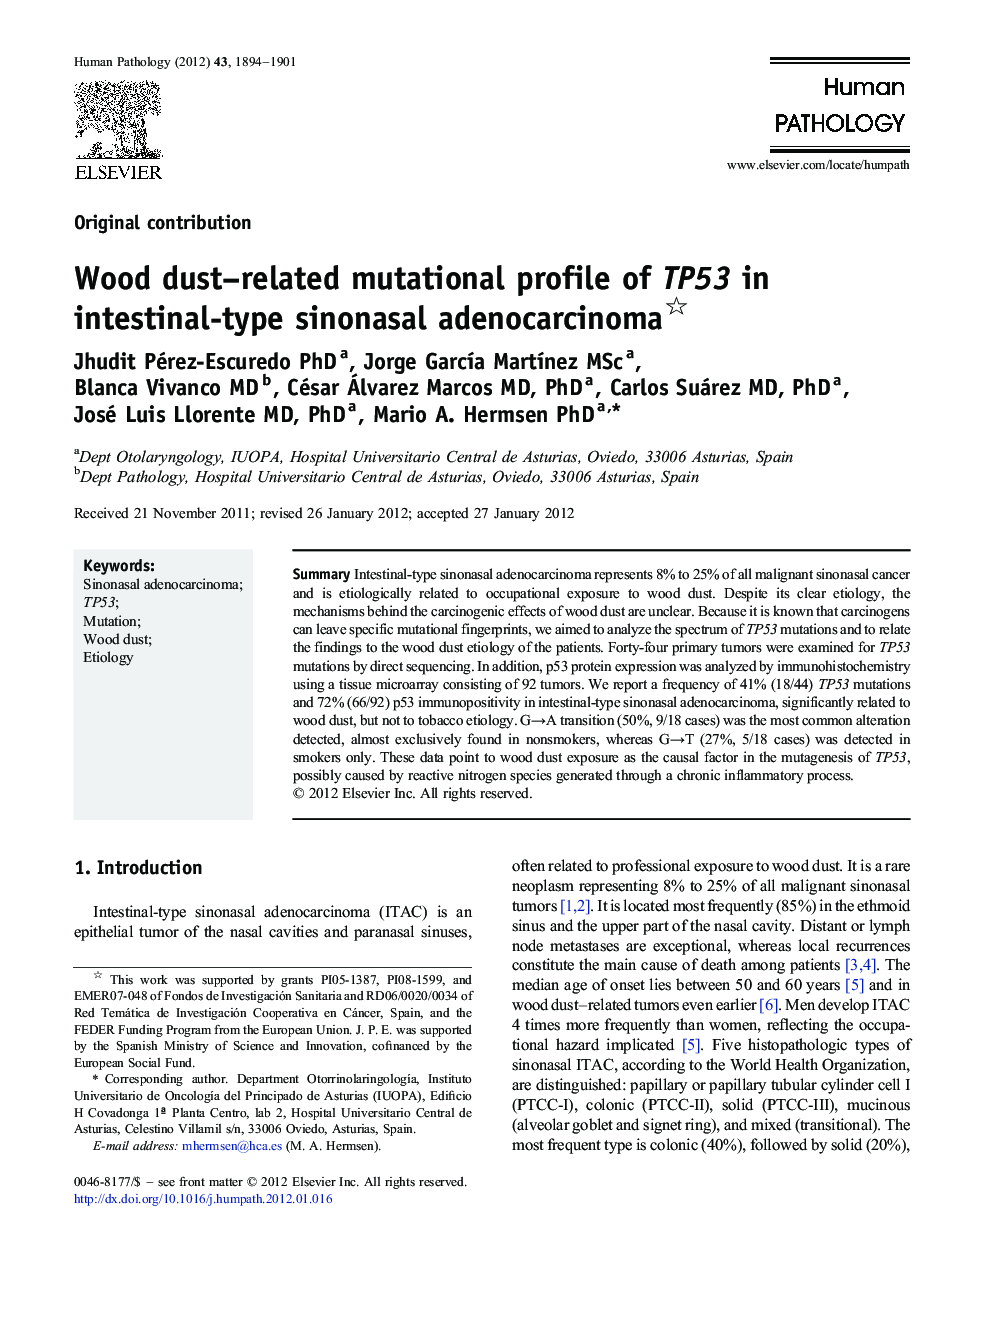 Wood dust-related mutational profile of TP53 in intestinal-type sinonasal adenocarcinoma